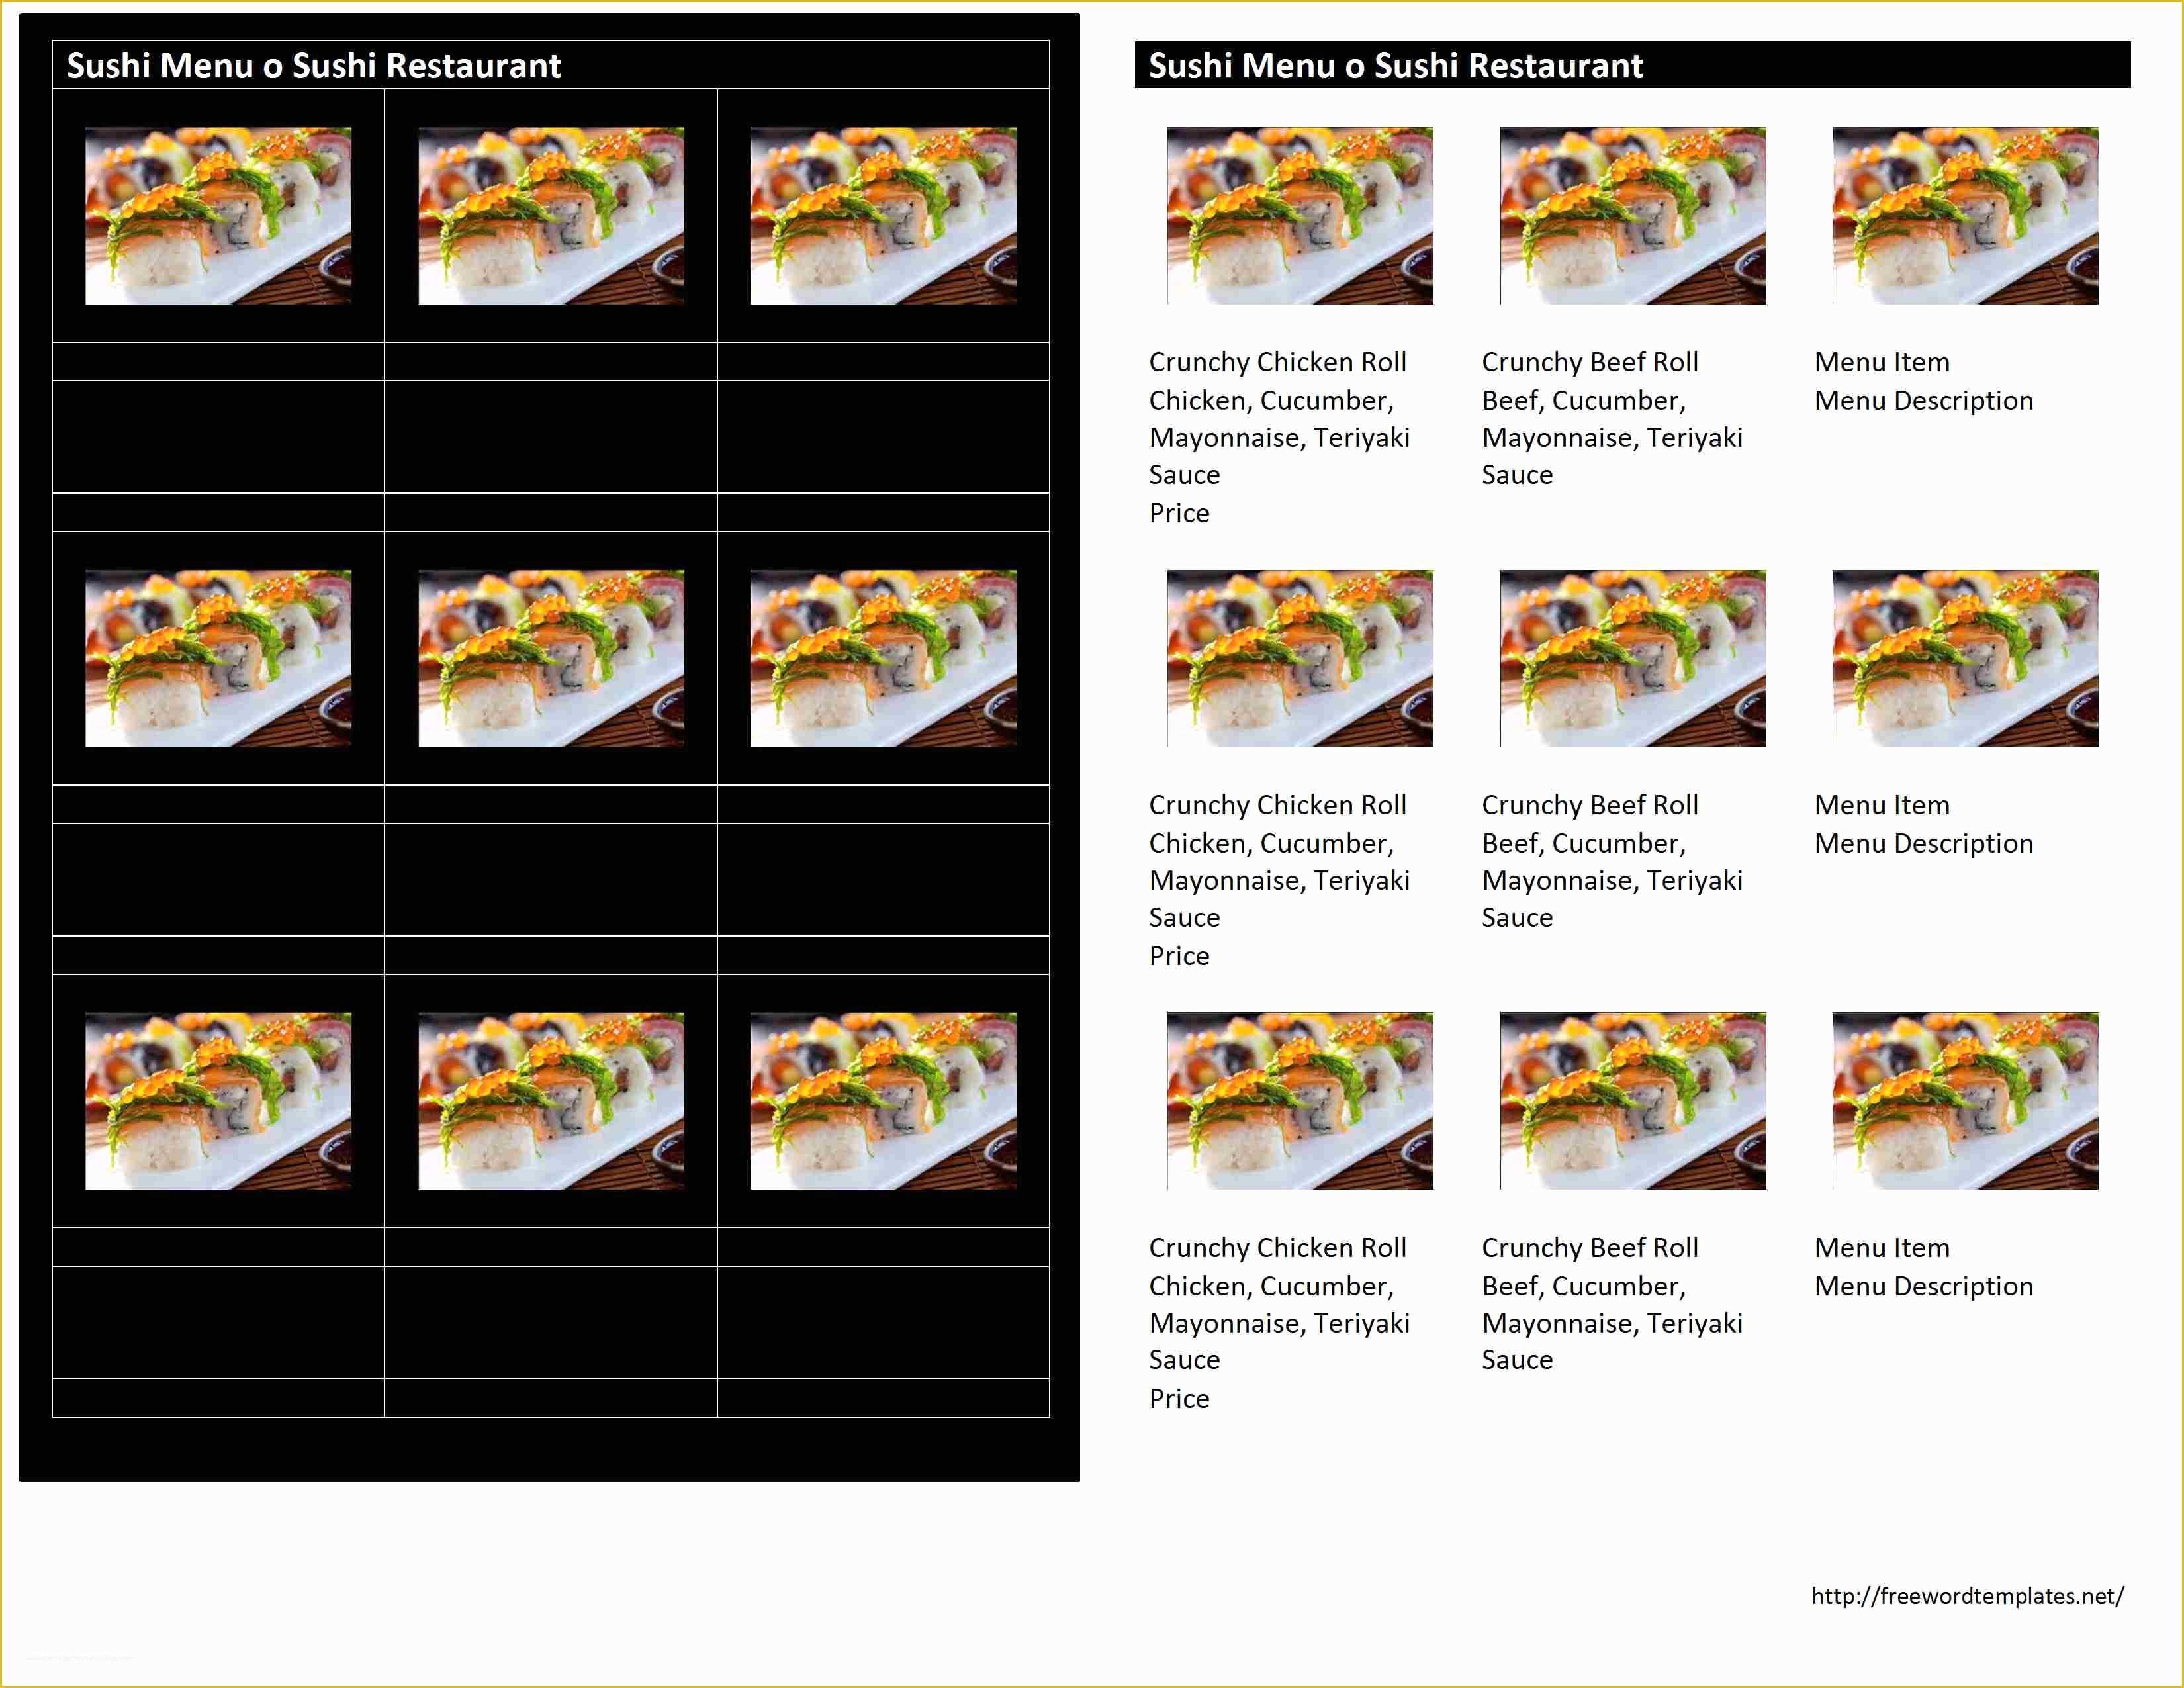 Sushi Menu Template Free Download Of Sushi Menu